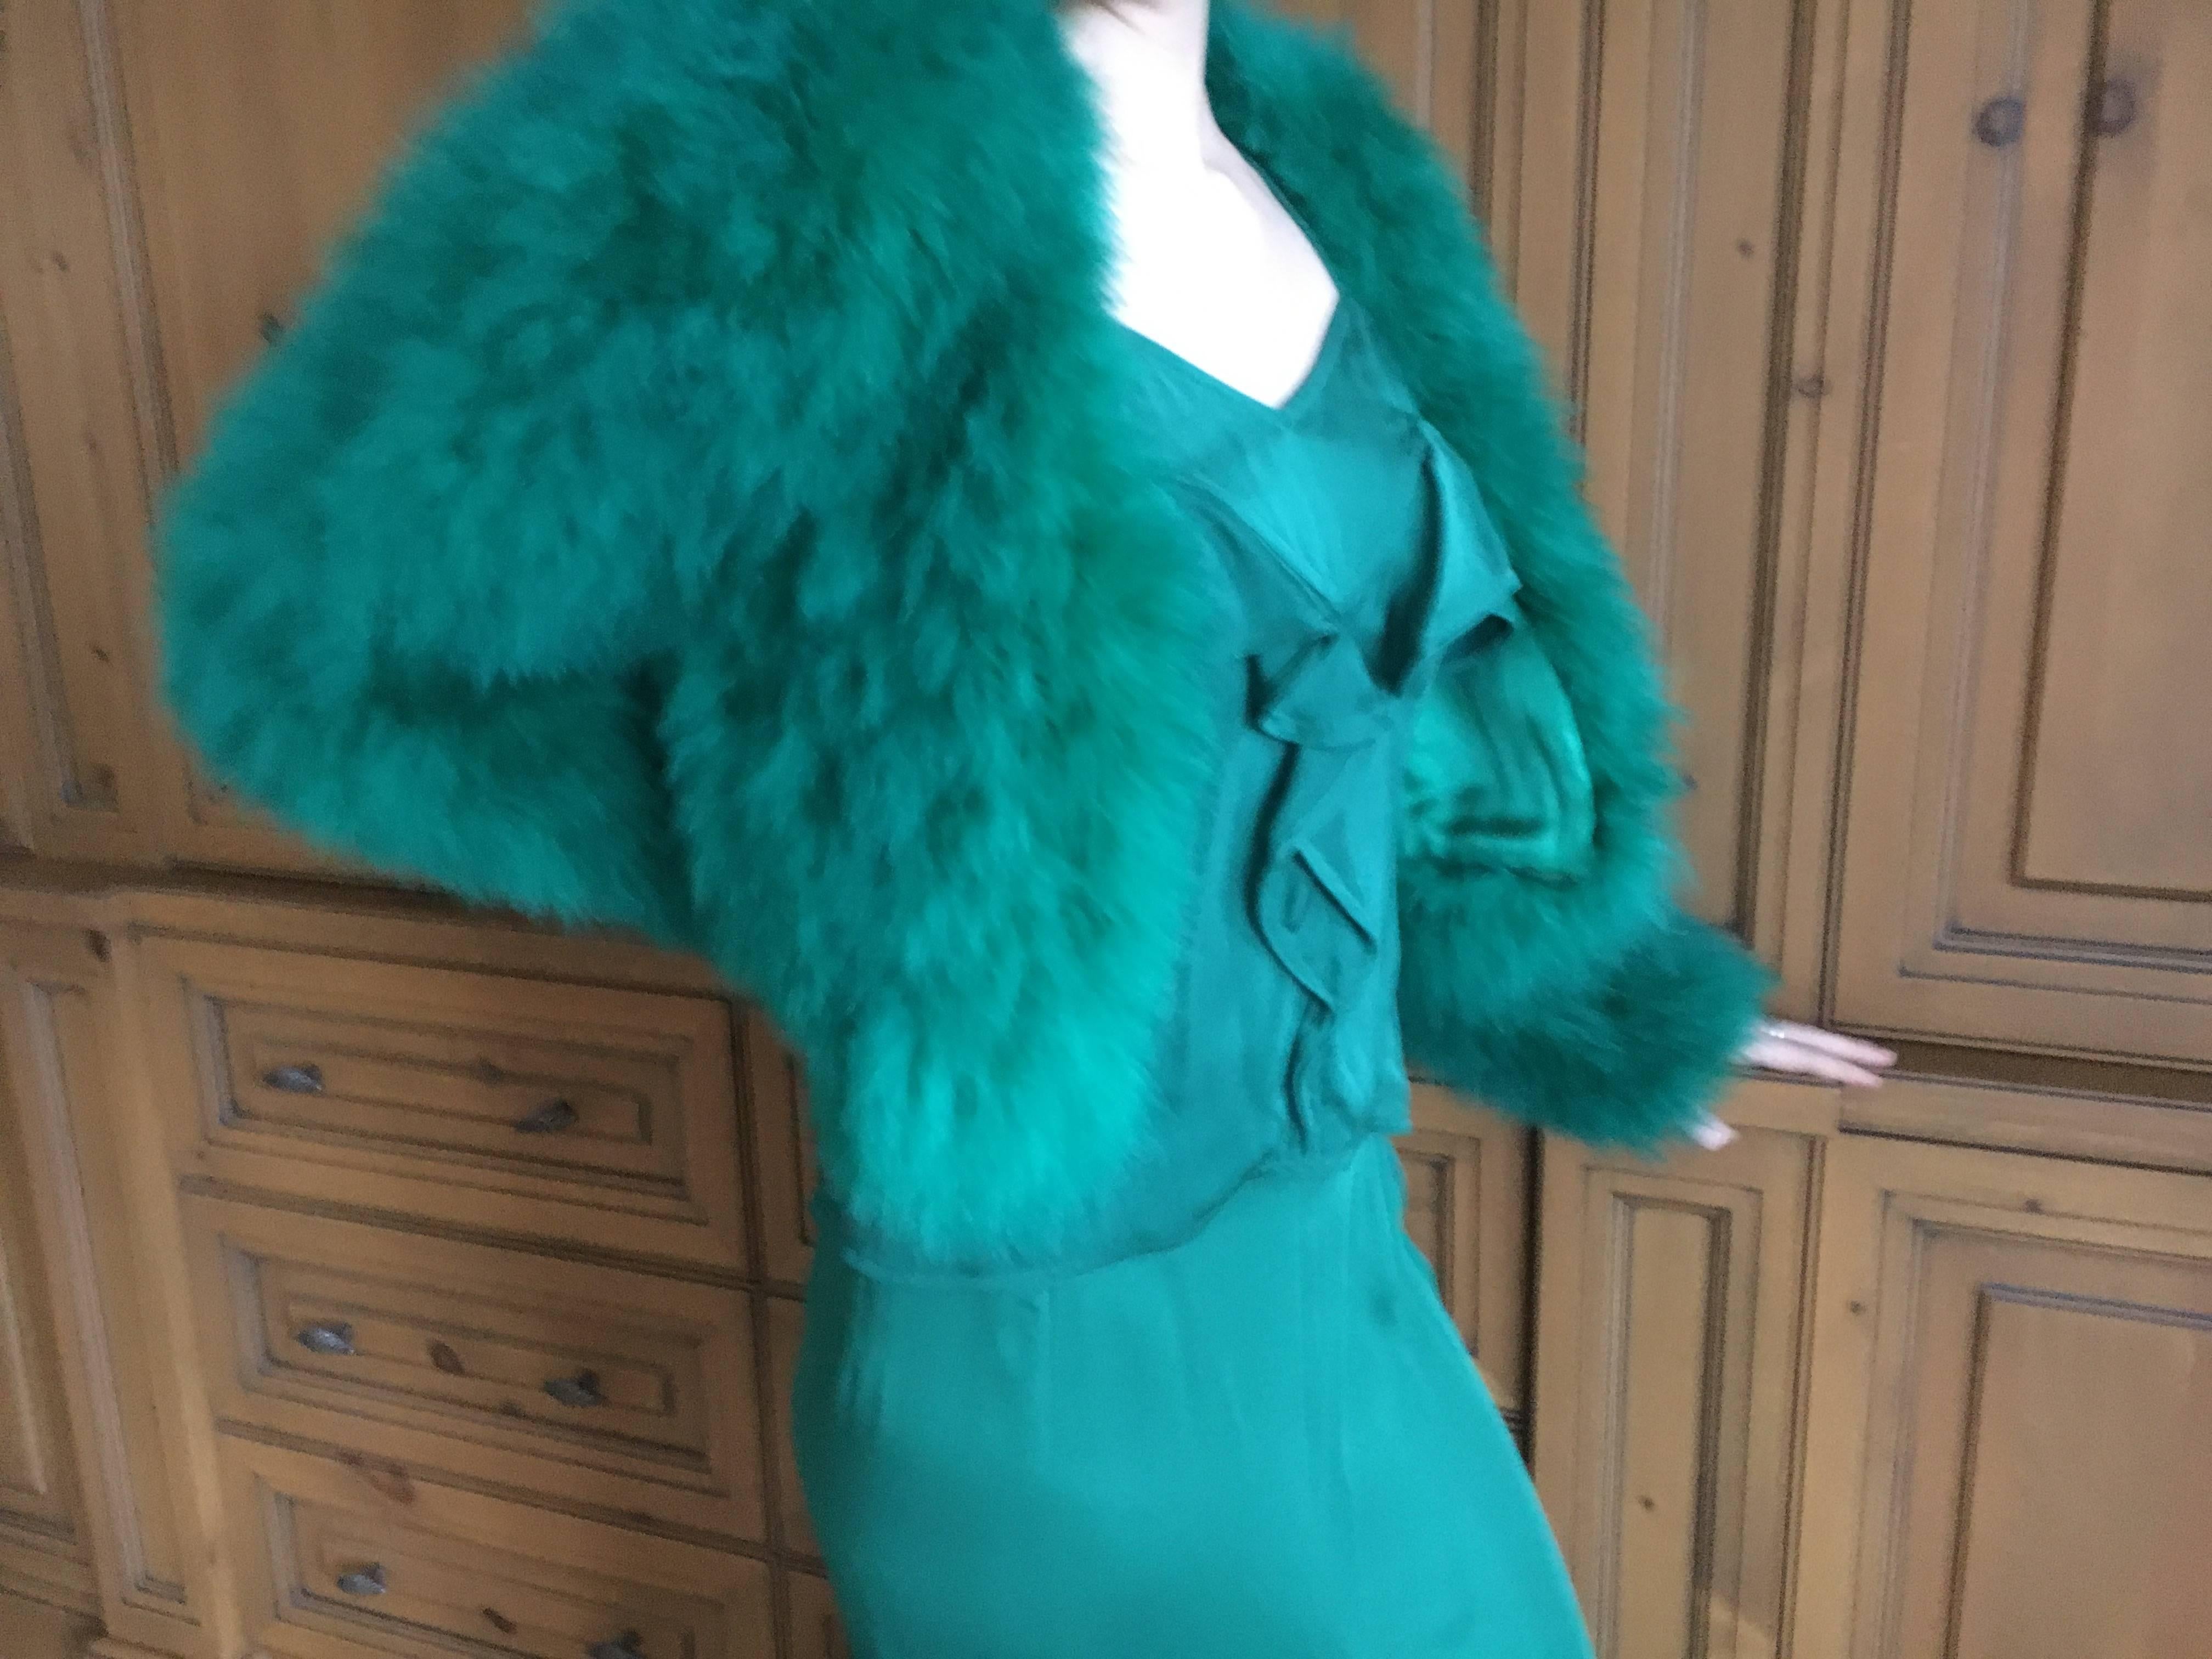  Saint Laurent by Hedi Slimane 2015 Green Turkey Feather Jacket For Sale 4